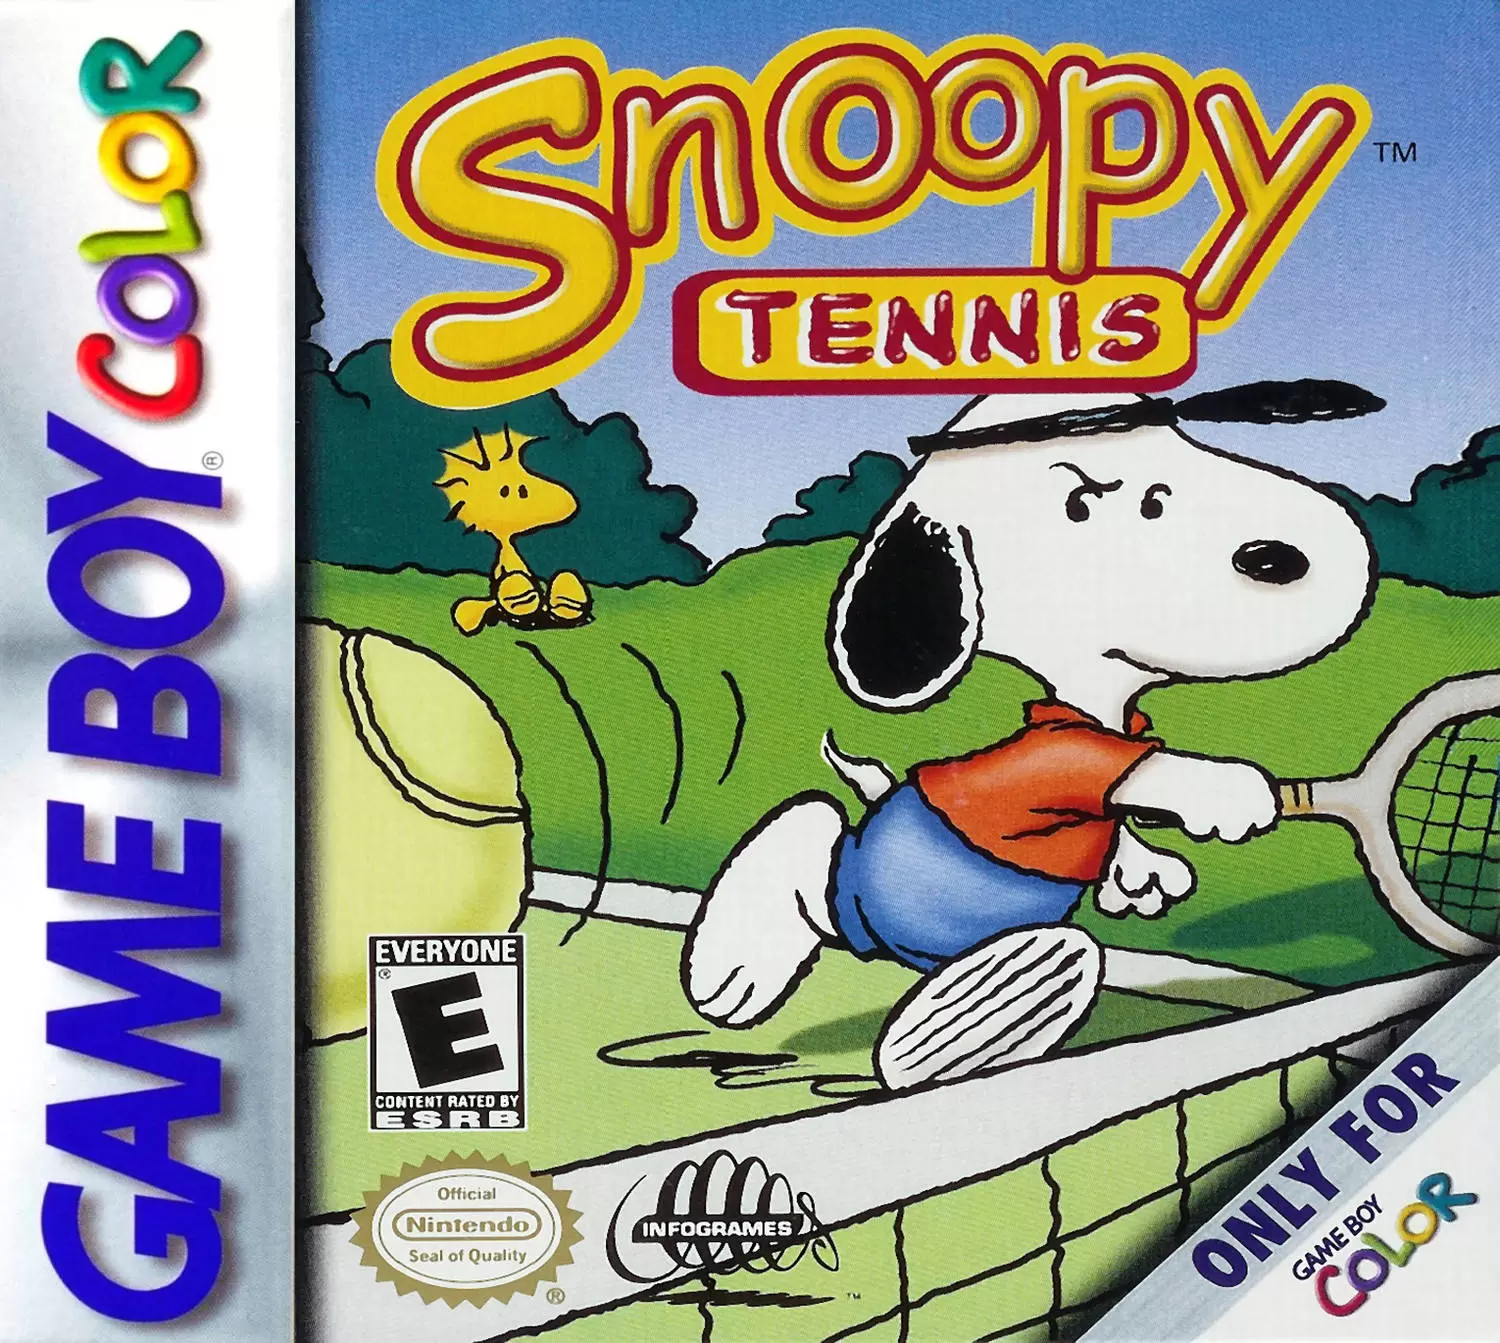 Game Boy Color Games - Snoopy Tennis